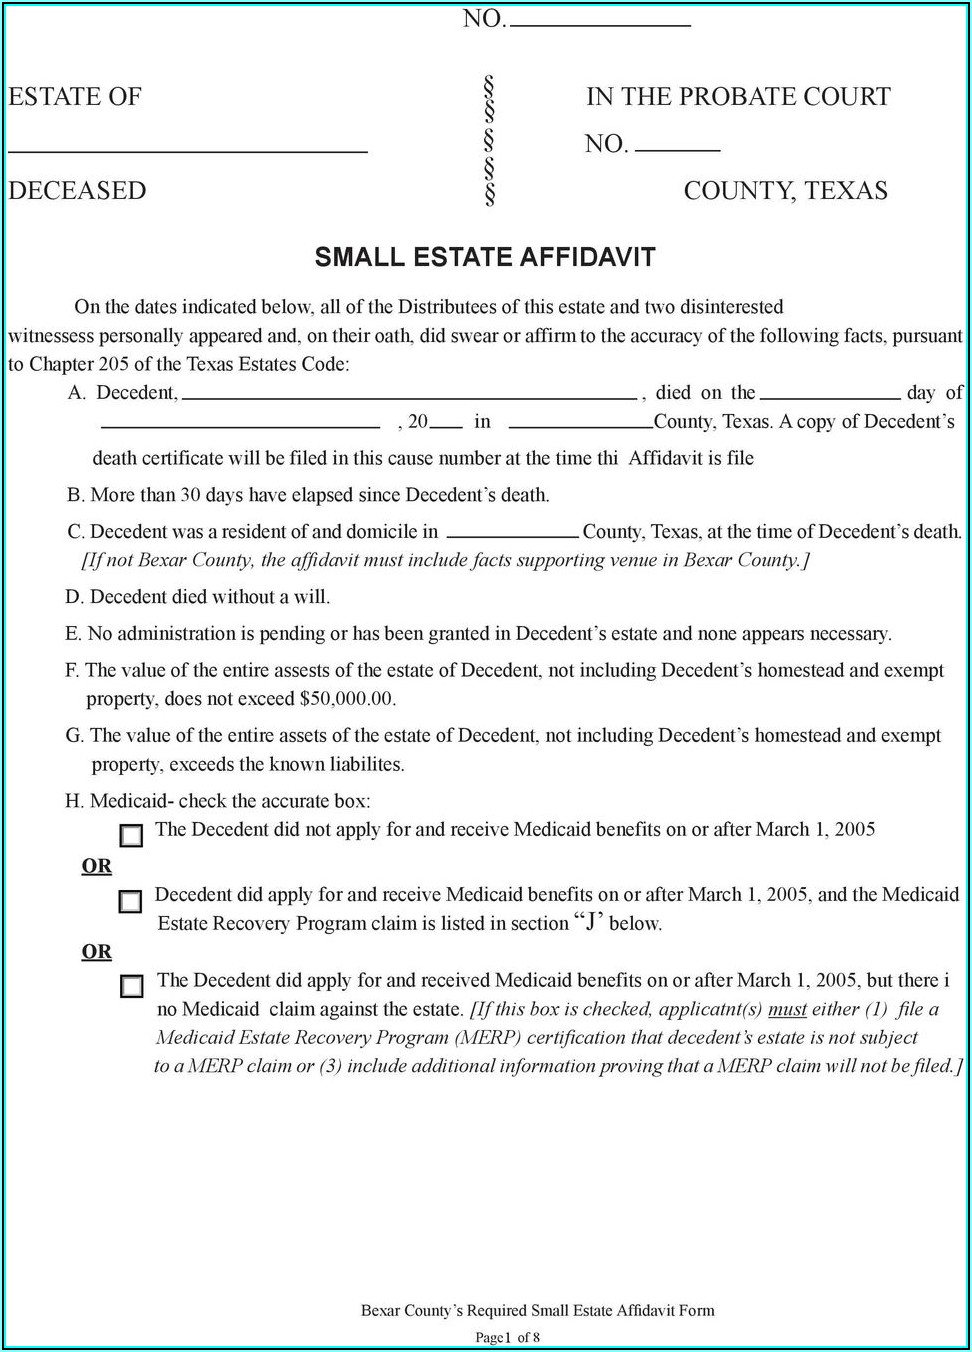 Small Estate Affidavit Form Bexar County Texas